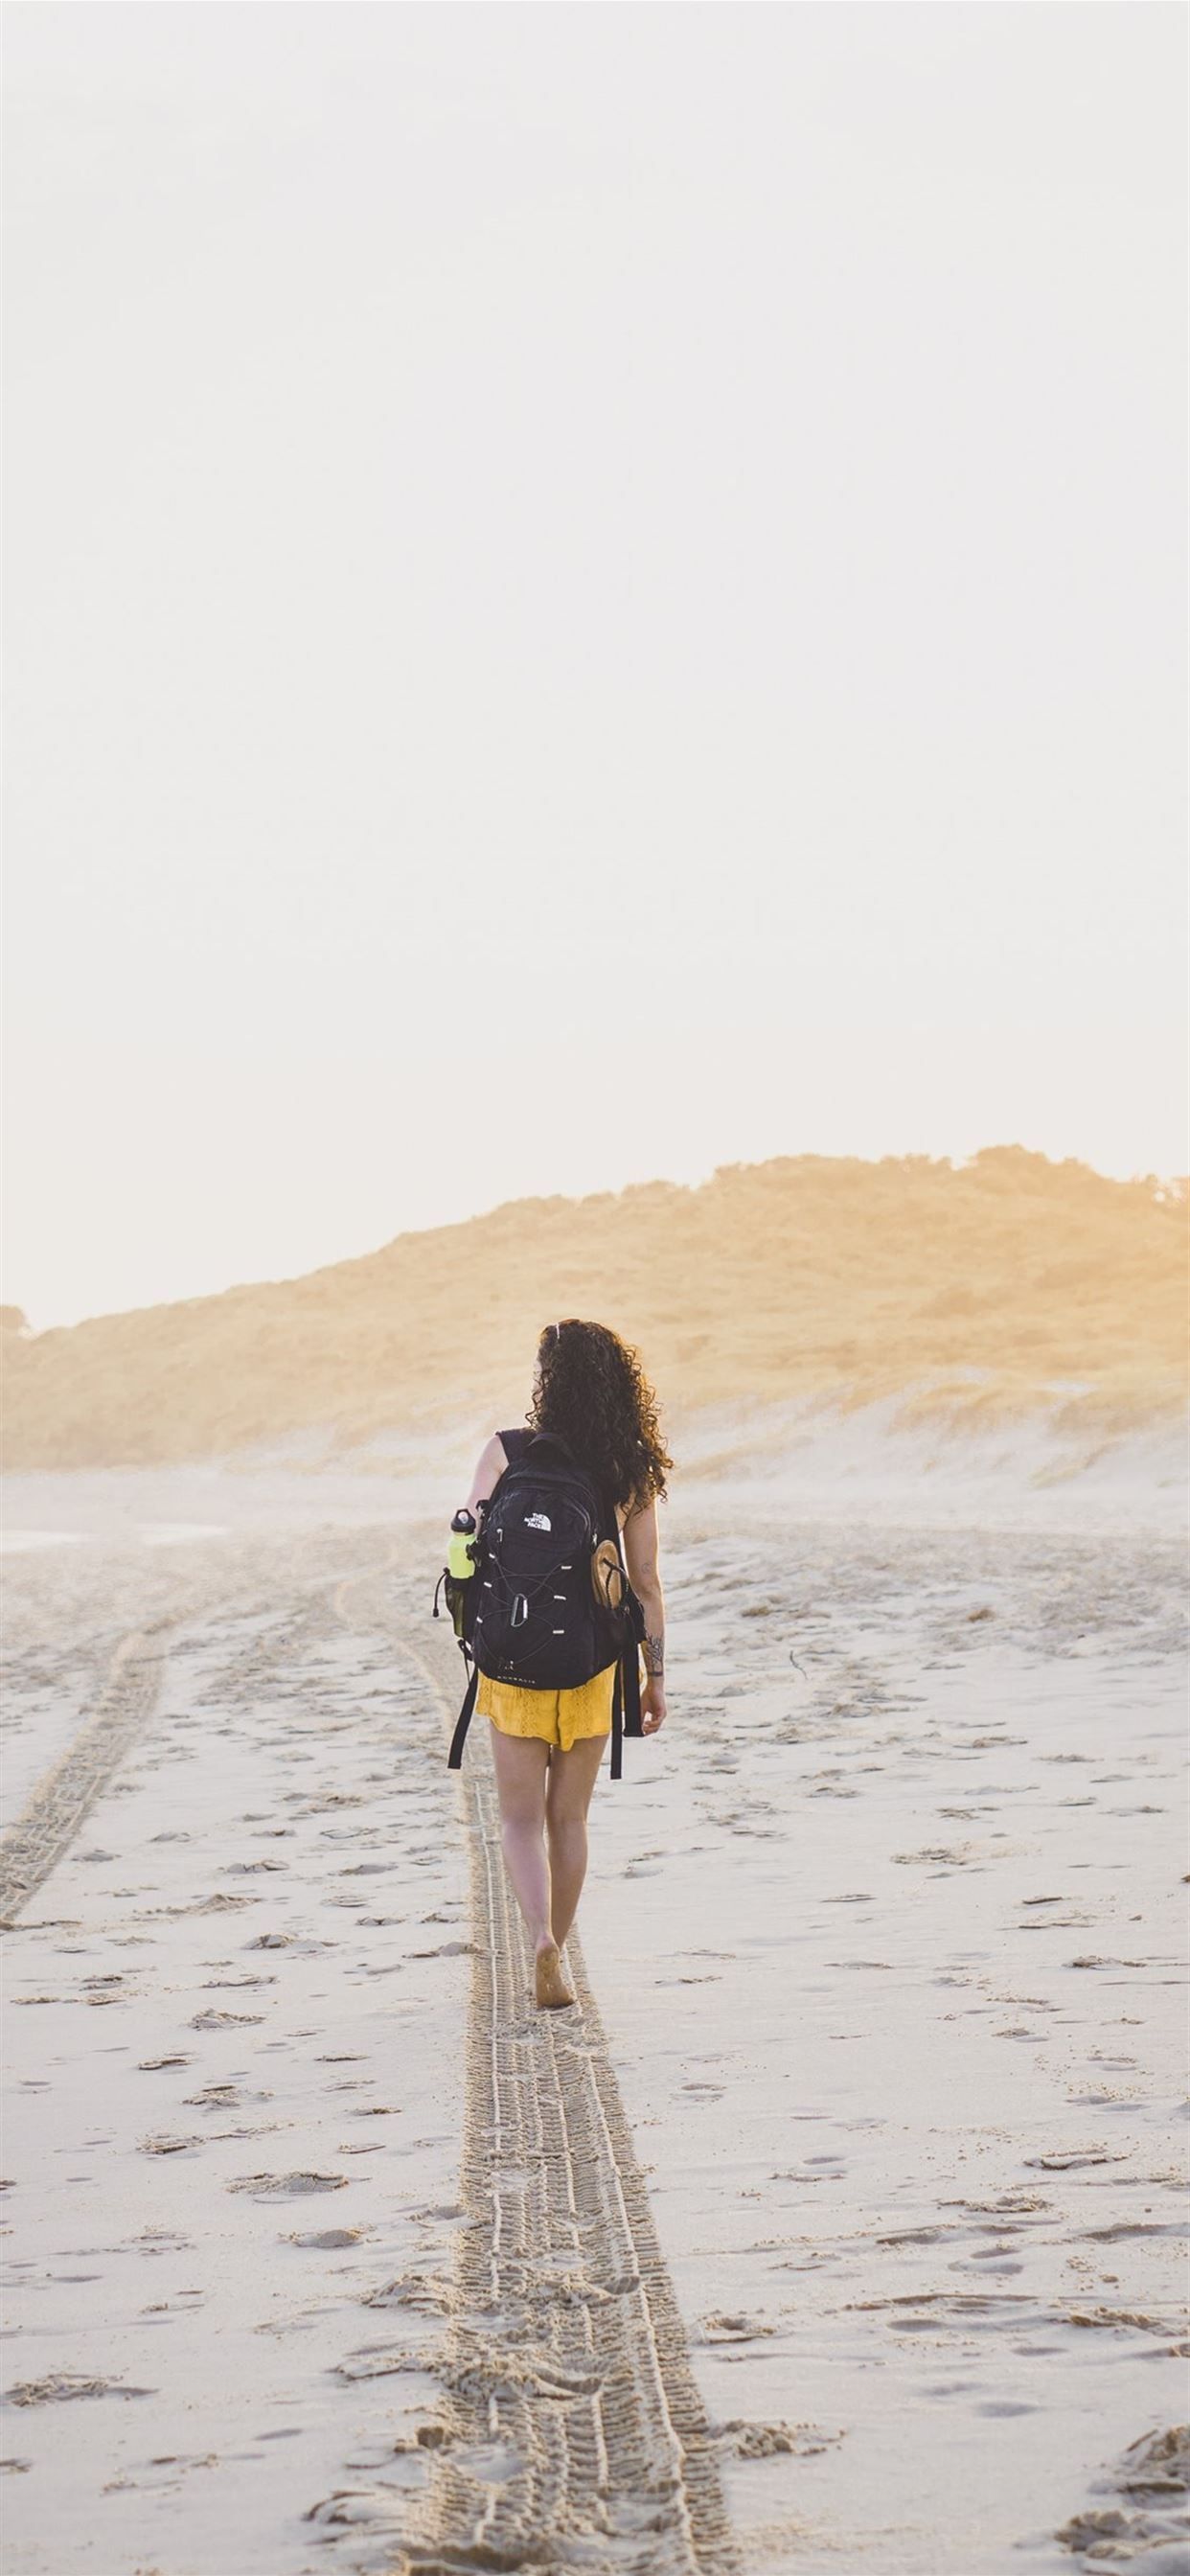 Sunset Beach Girl Walking Australia Day iPhone X Wallpaper Free Download